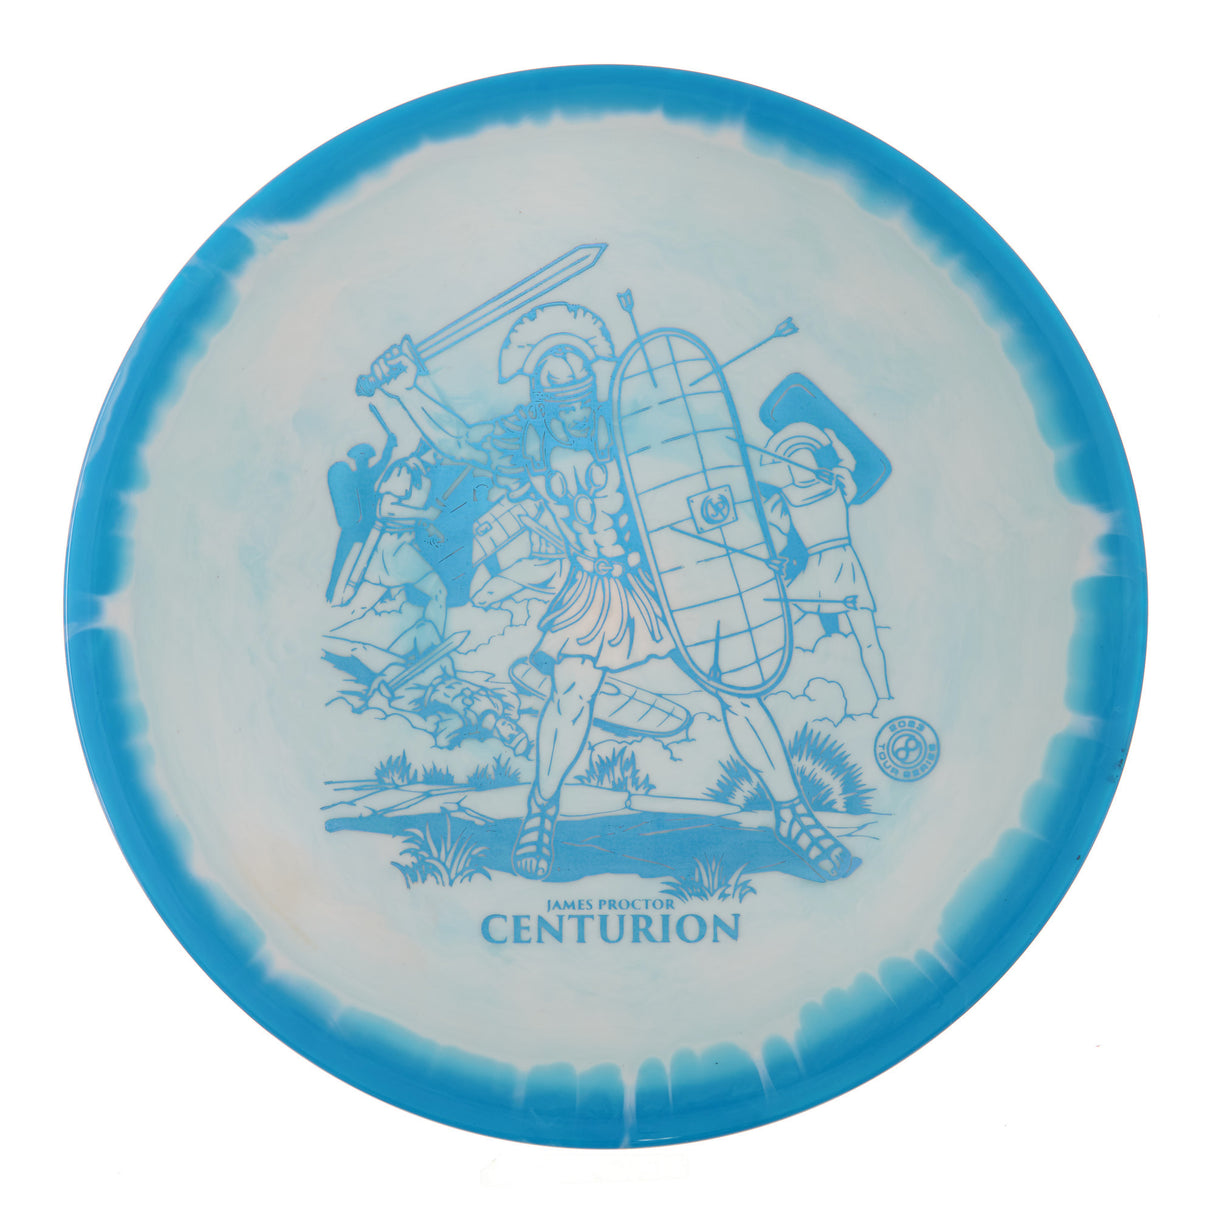 Infinite Discs Centurion - James Proctor Halo S-Blend 162g | Style 0001